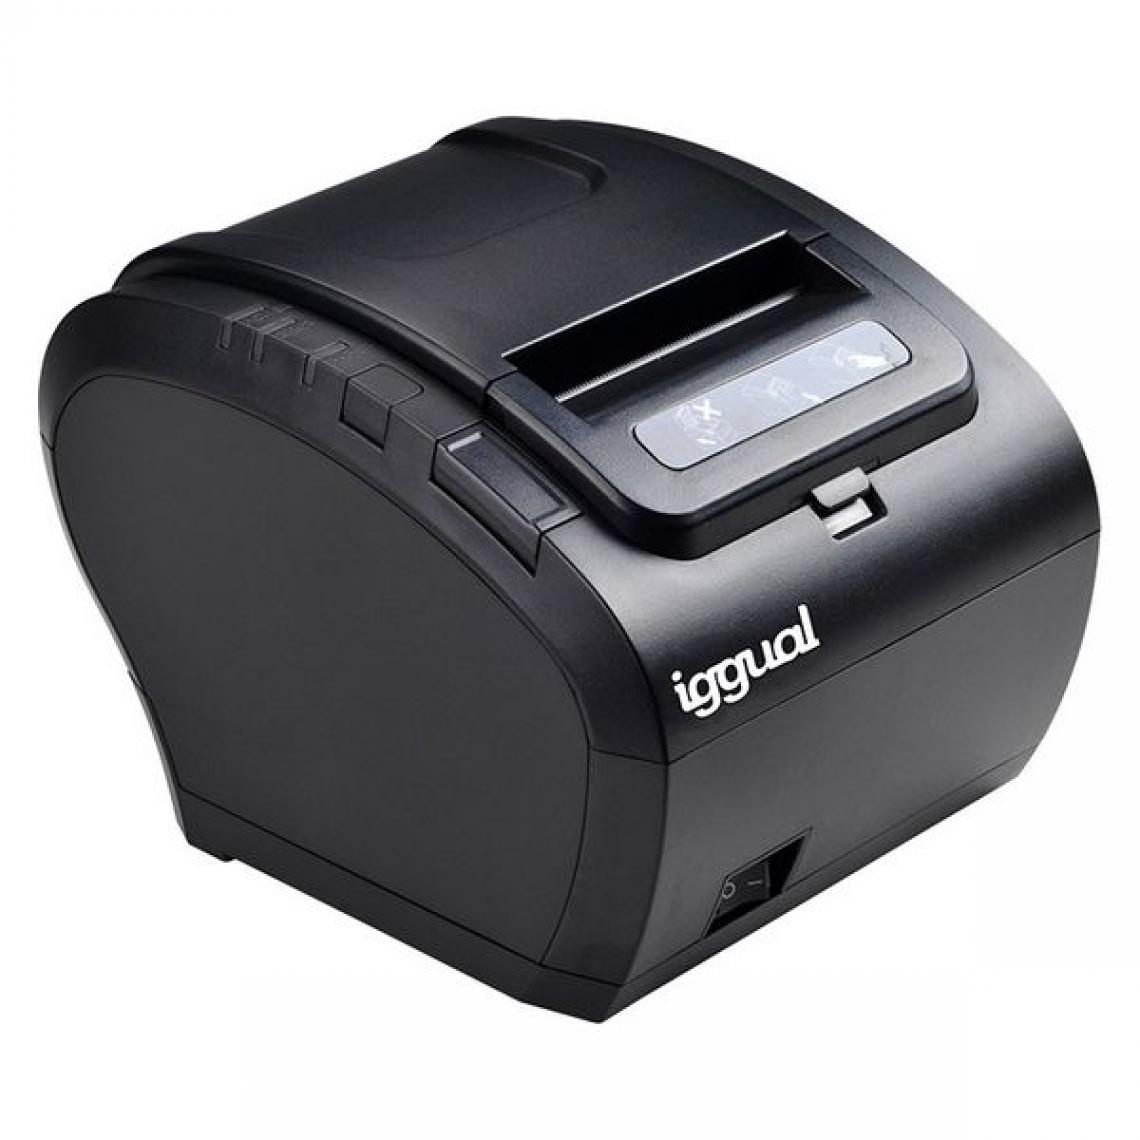 Iggual - Imprimante Thermique iggual TP8002 203 dpi Noir - Imprimante Jet d'encre